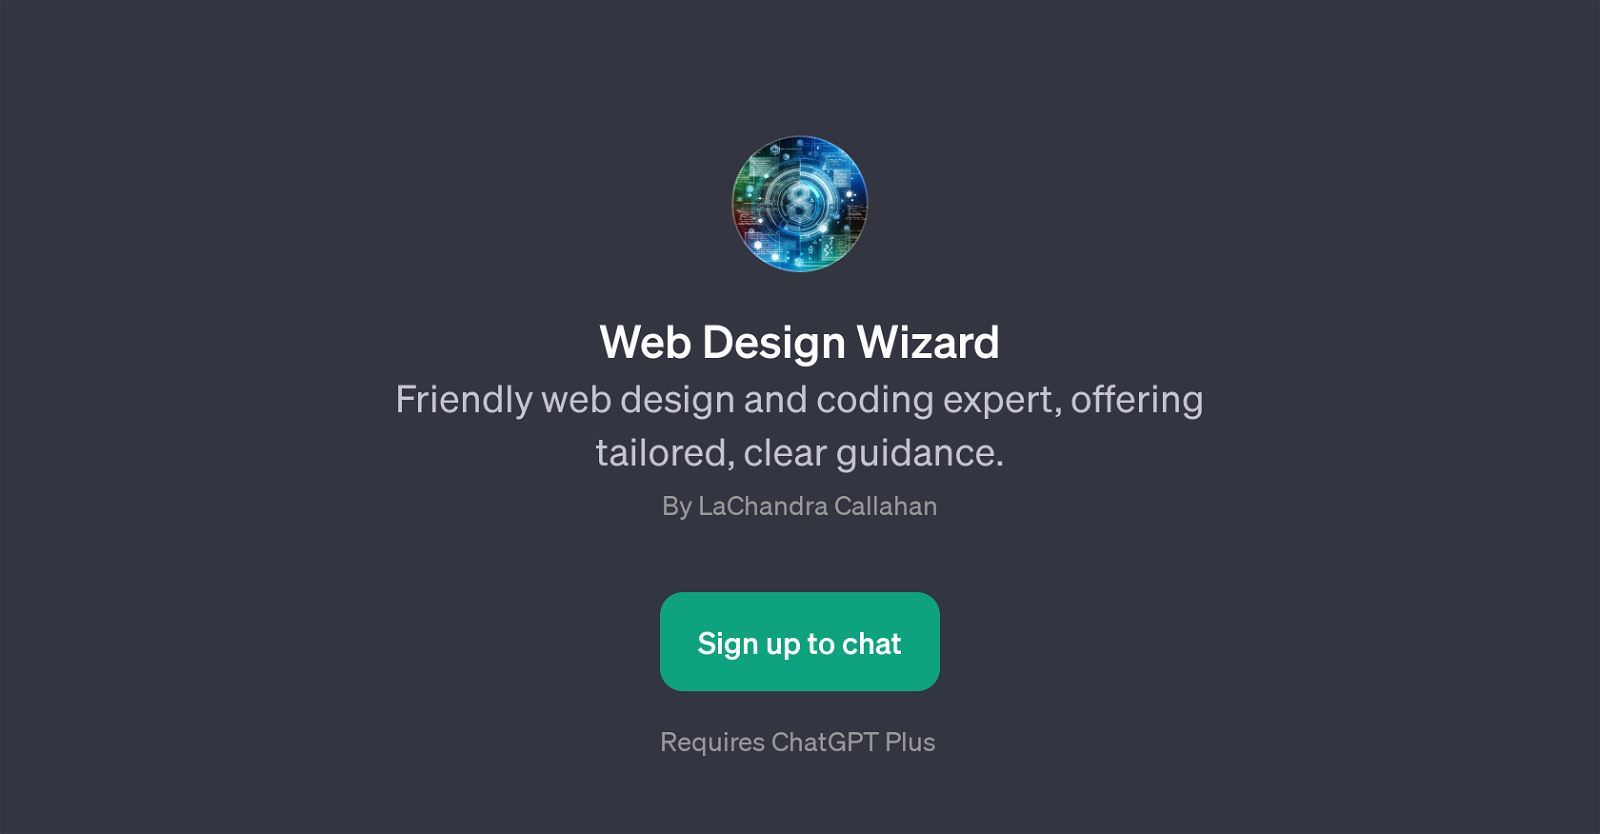 Web Design Wizard website